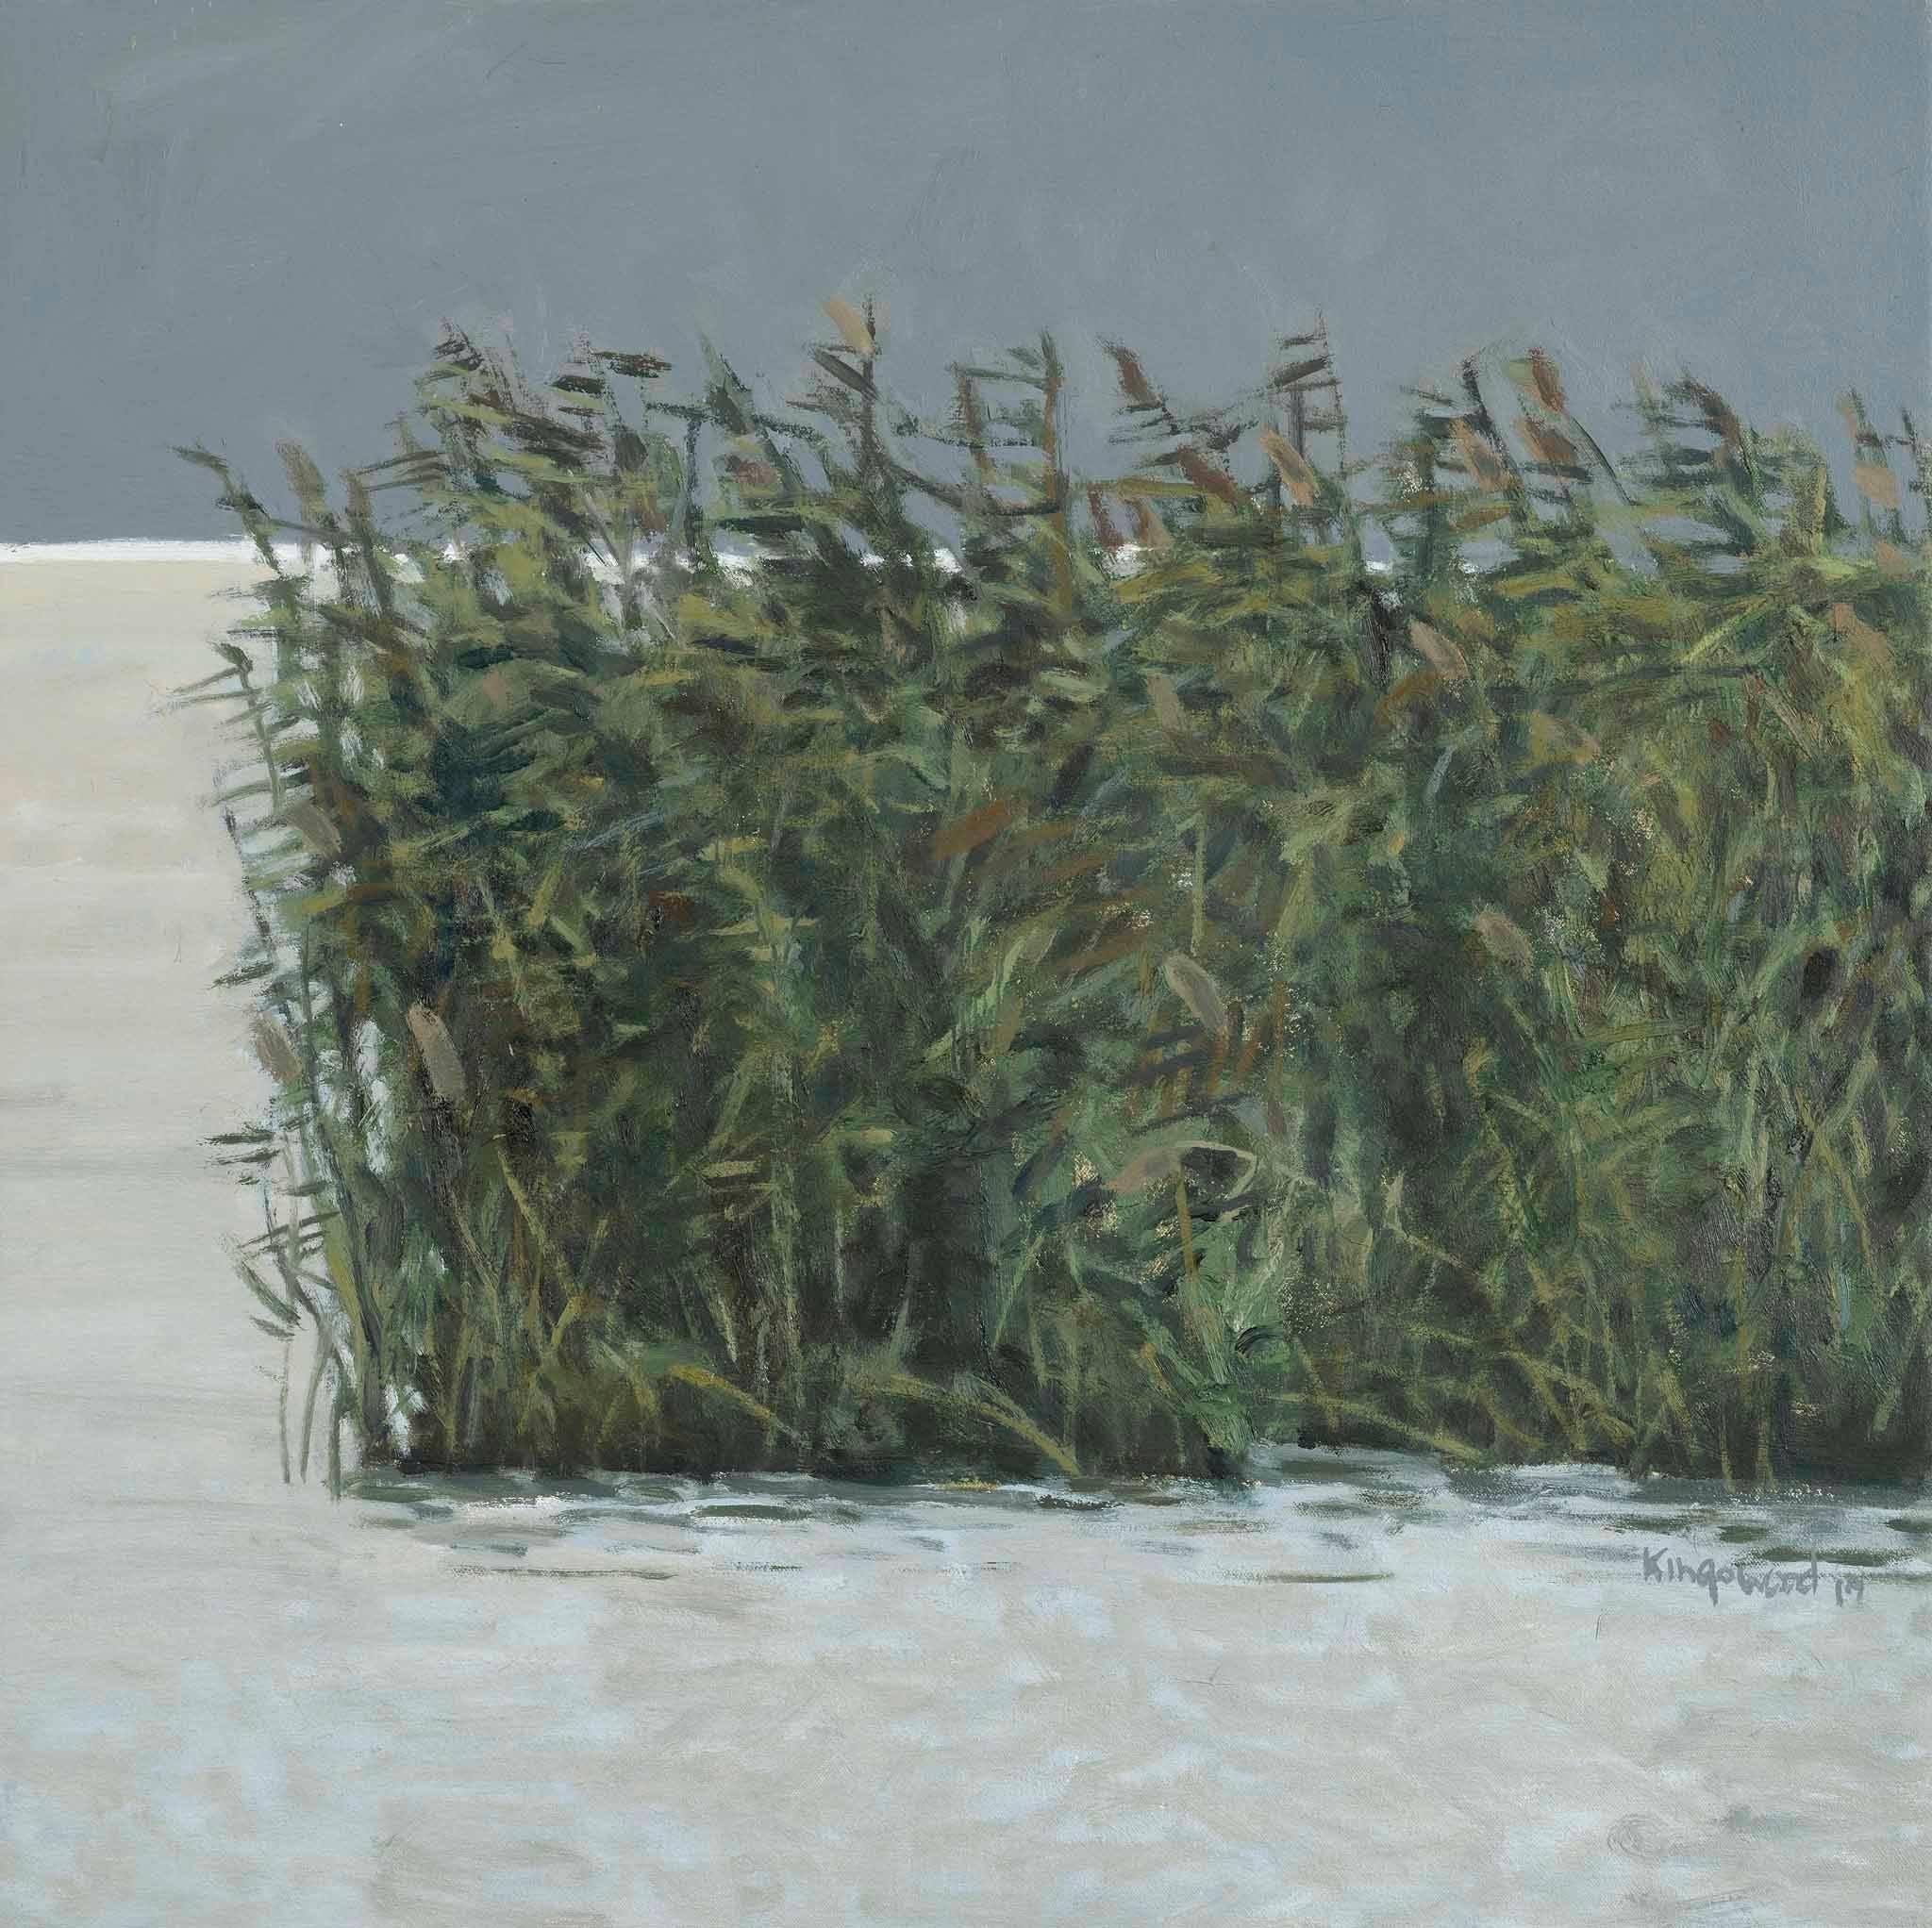 Ron Kingswood Landscape Painting - Seeking Sanctuary - Study - 21st century - Contemporary - Oil 